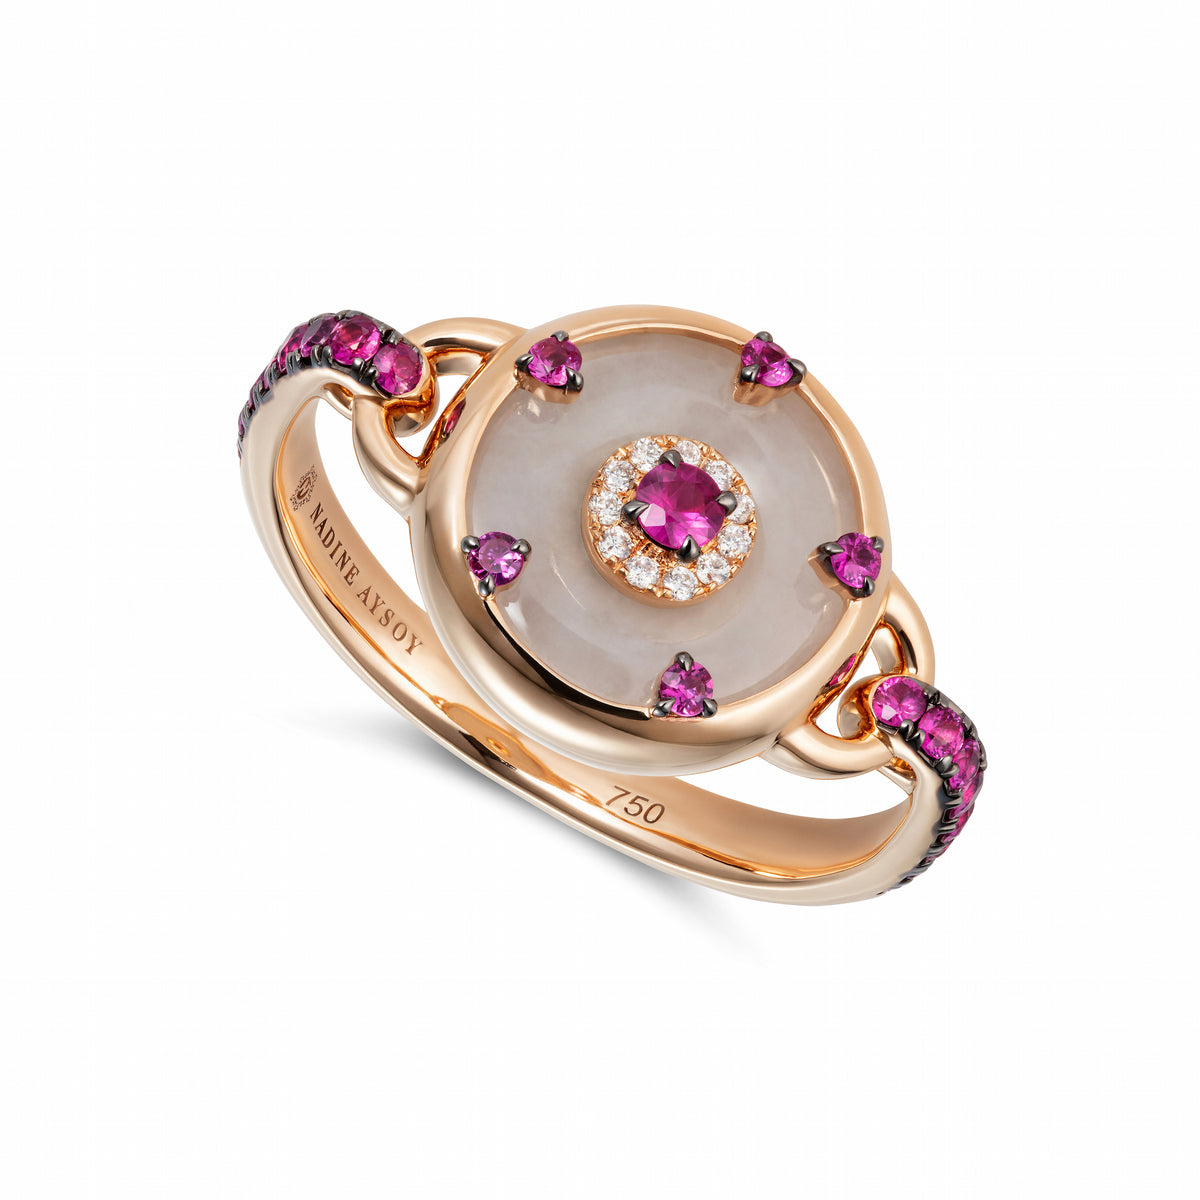 Celeste Petite Pink Sapphire Ring